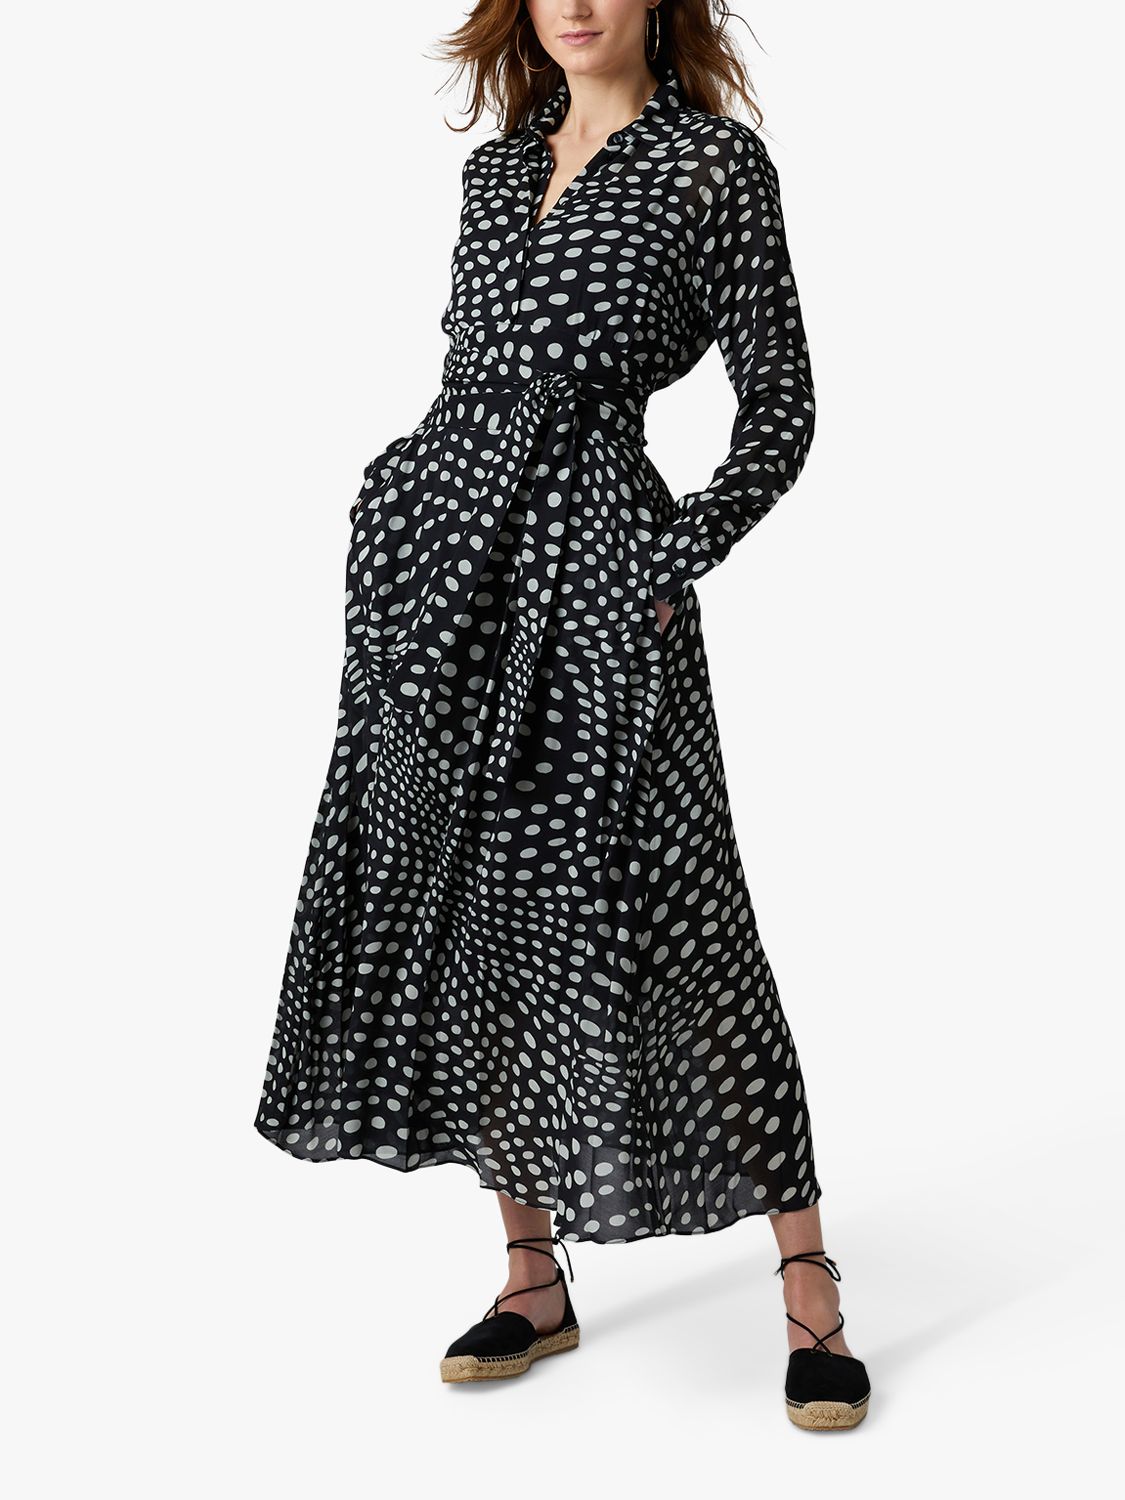 Jasper Conran London Chloe Spot Print Midi Shirt Dress, Black/White, 8